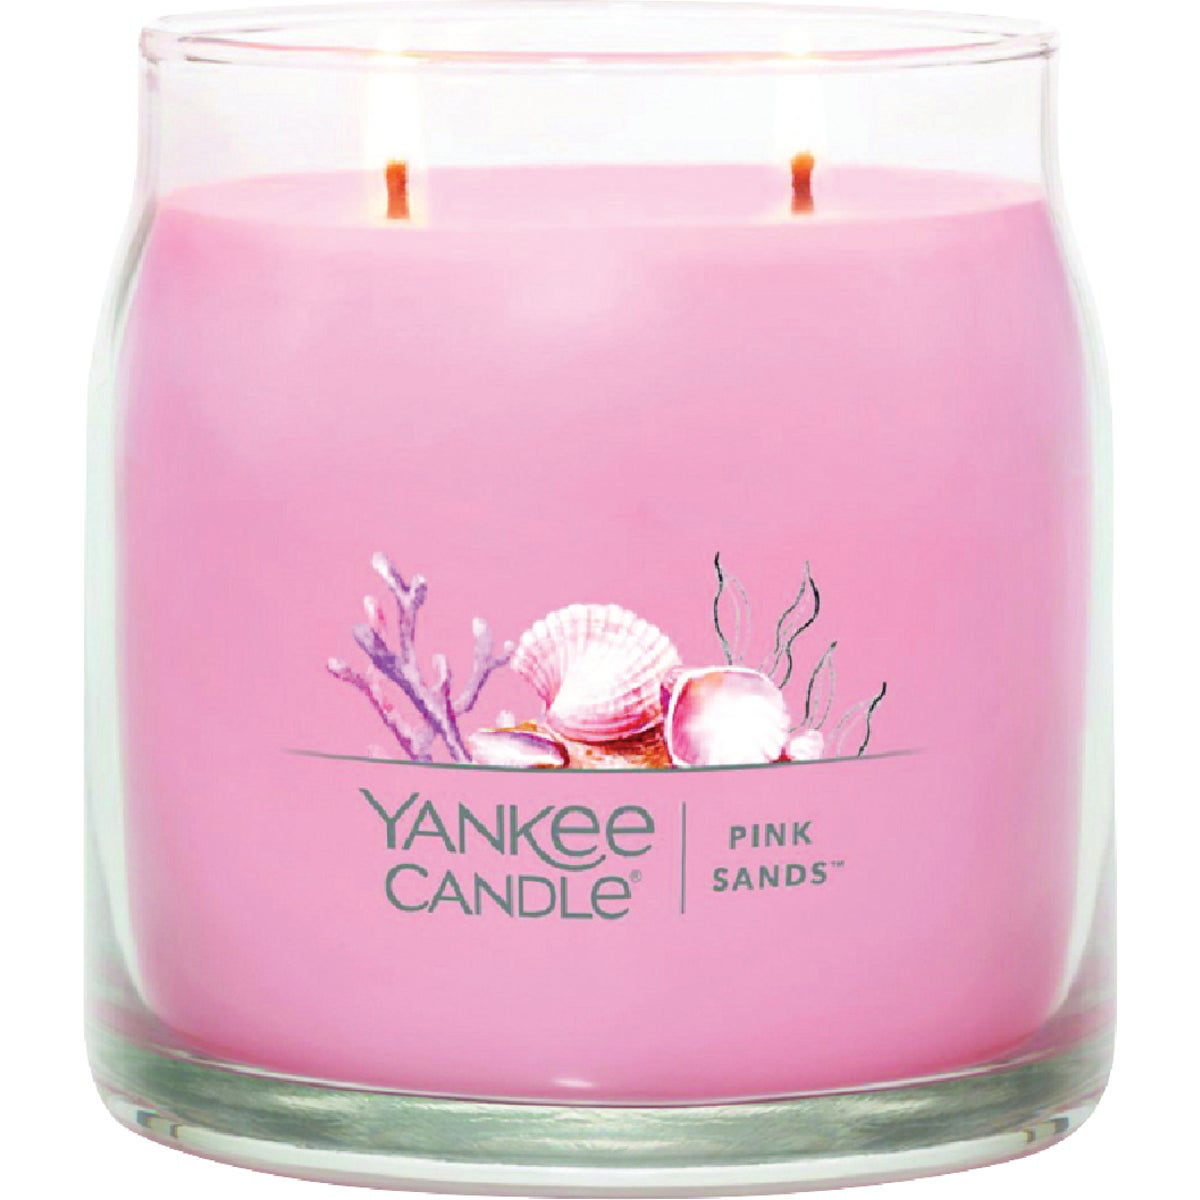 Yankee Candle Pink Sands - 22 oz Original Large Jar Scented Candle 